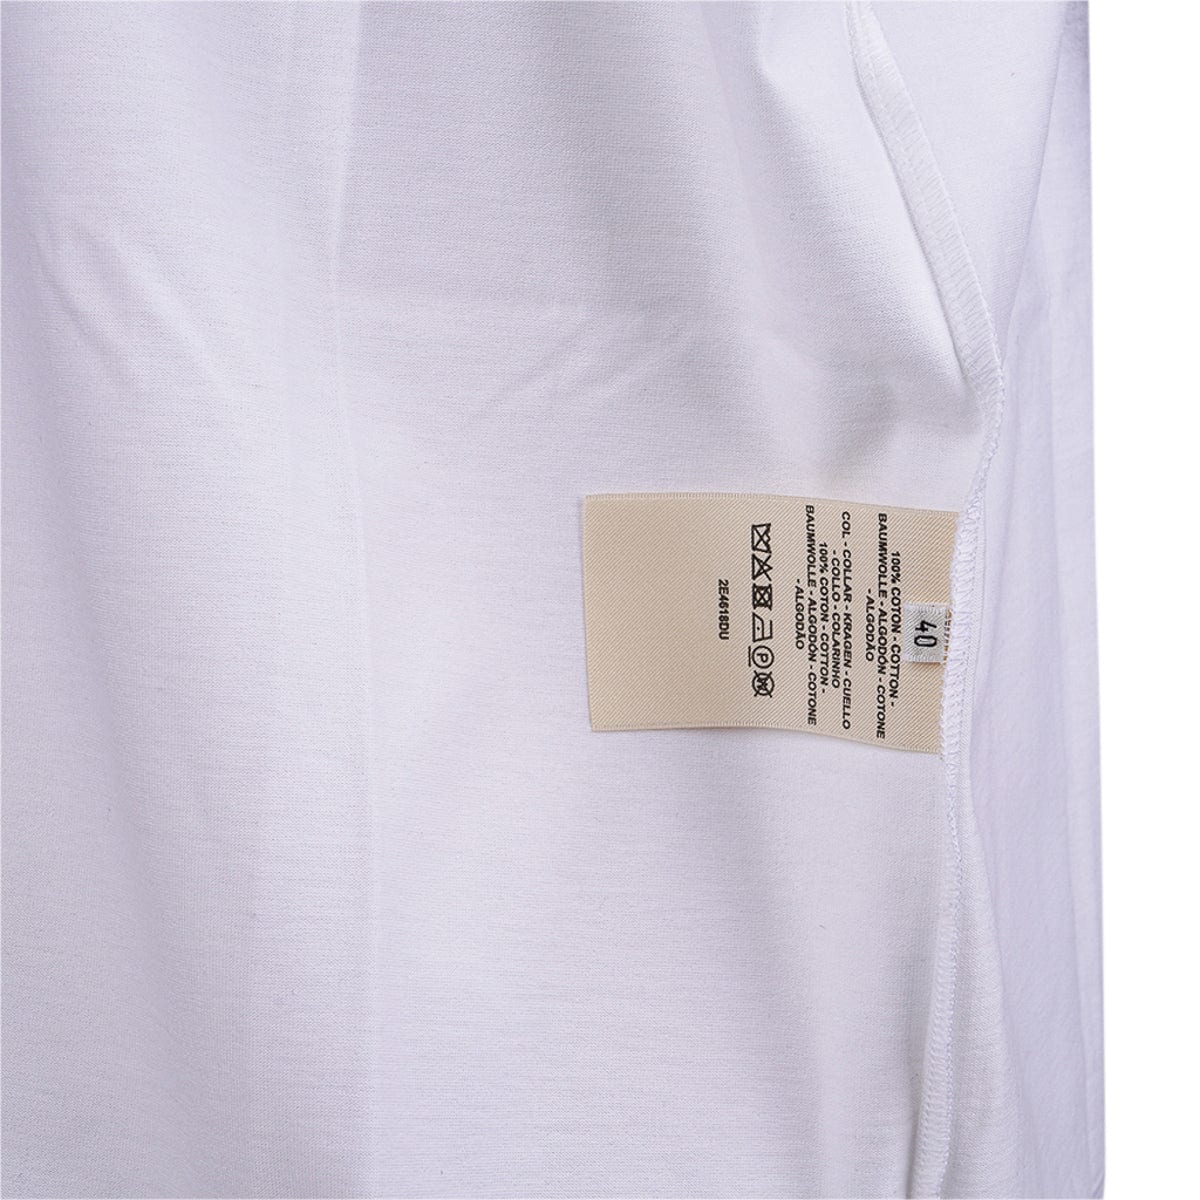 Louis Vuitton Slim Shirt with Micro Design White. Size 42